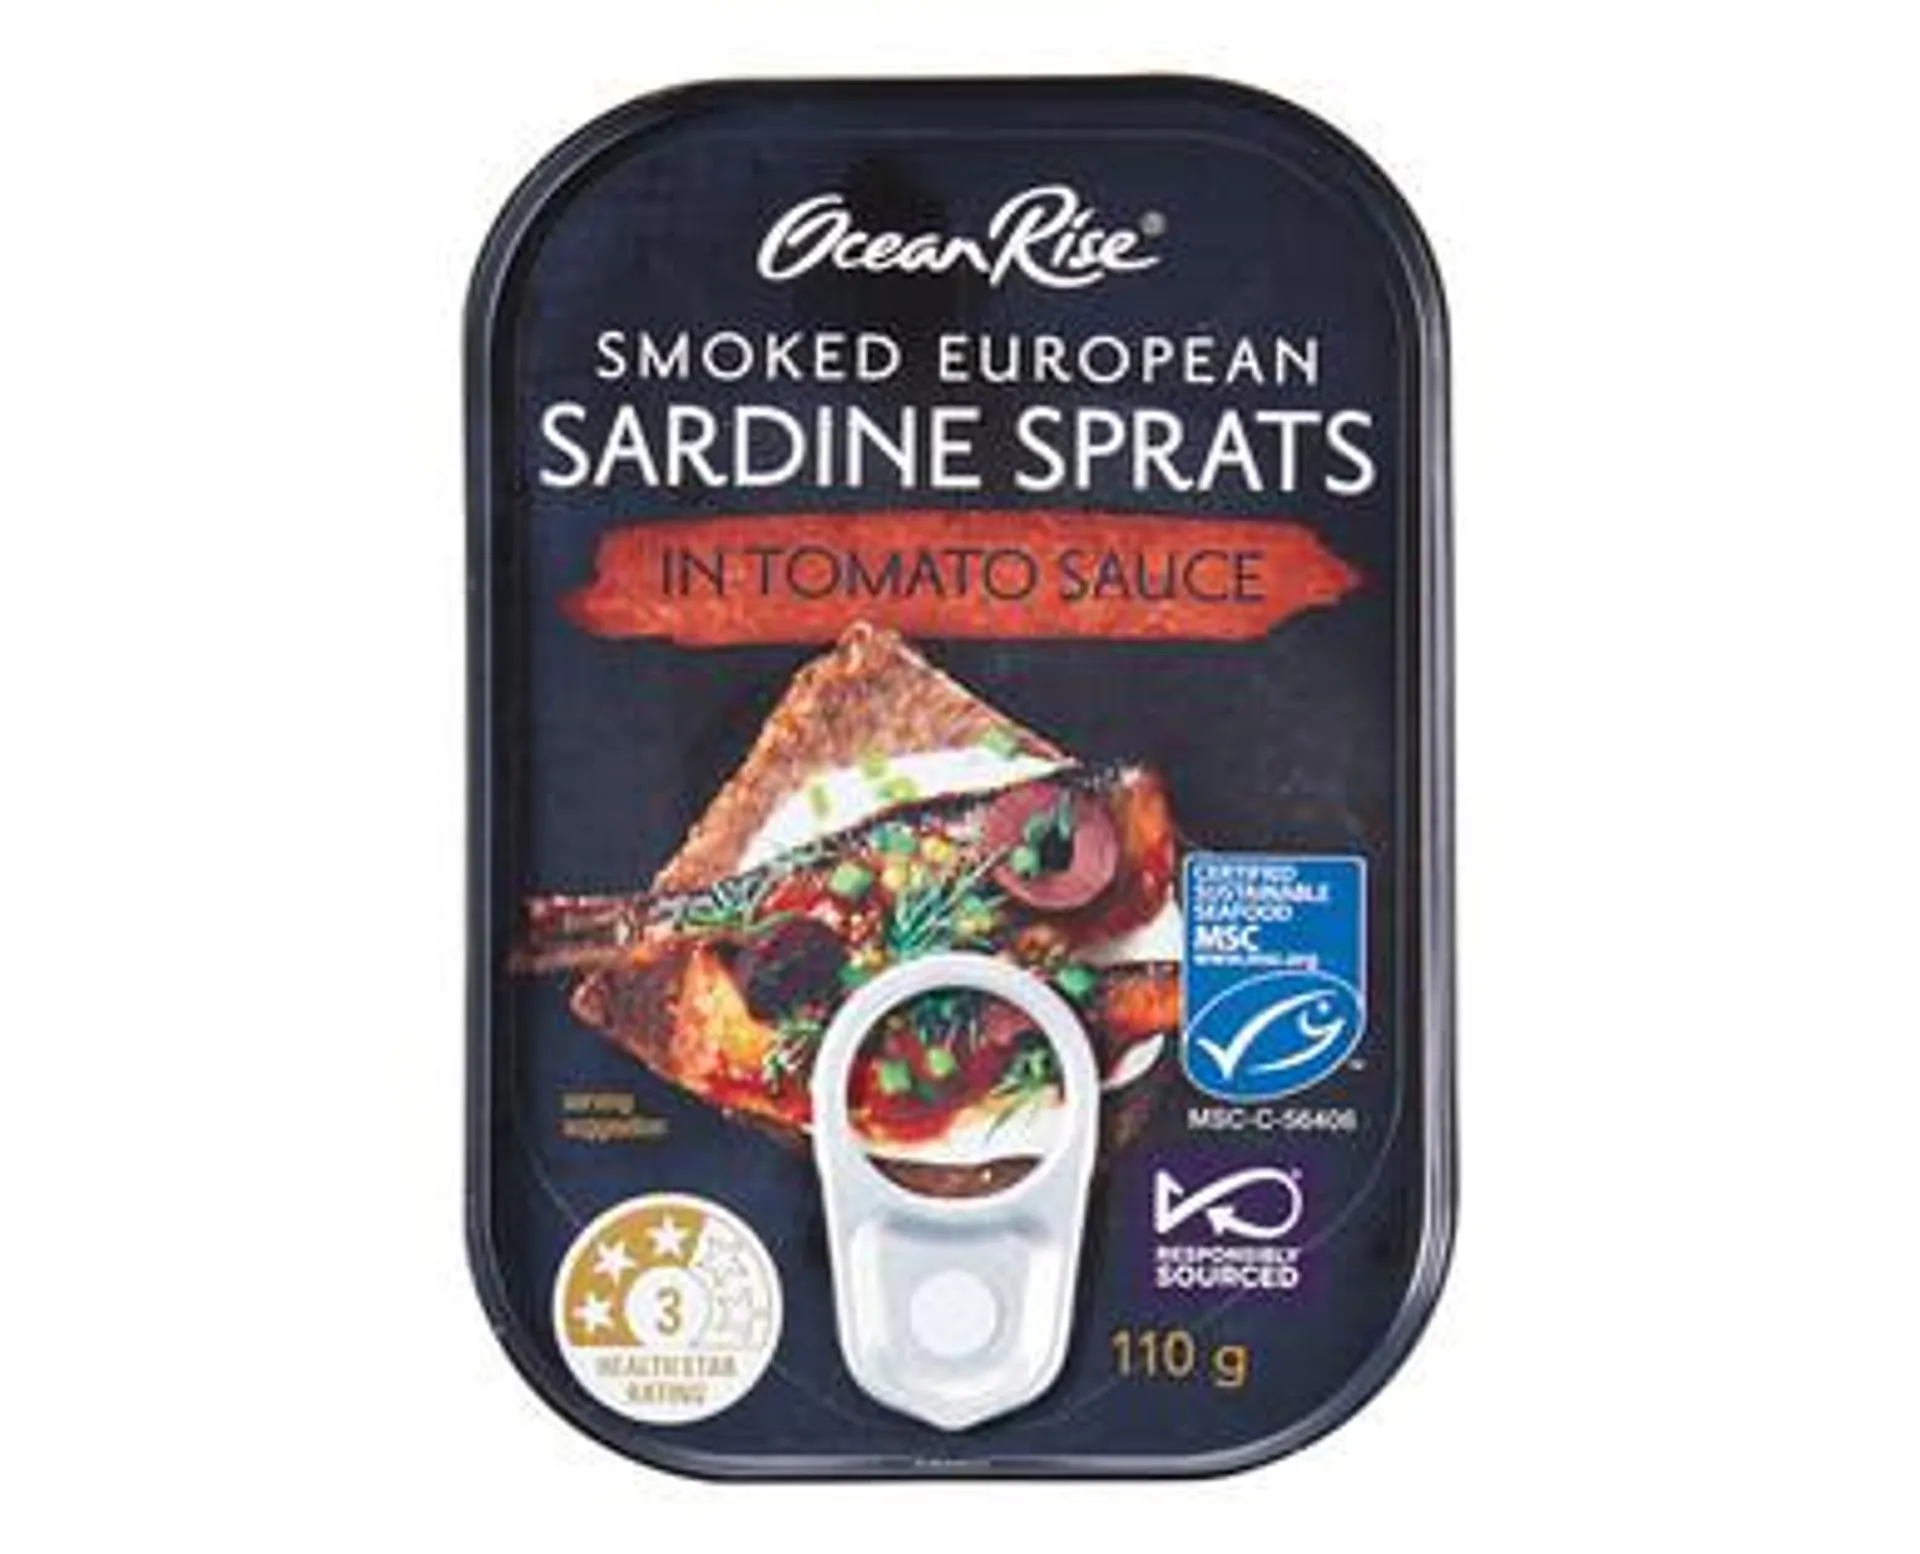 Ocean Rise Smoked Sardine Sprats Oil, Hot Chilli or Tomato Sauce 110g